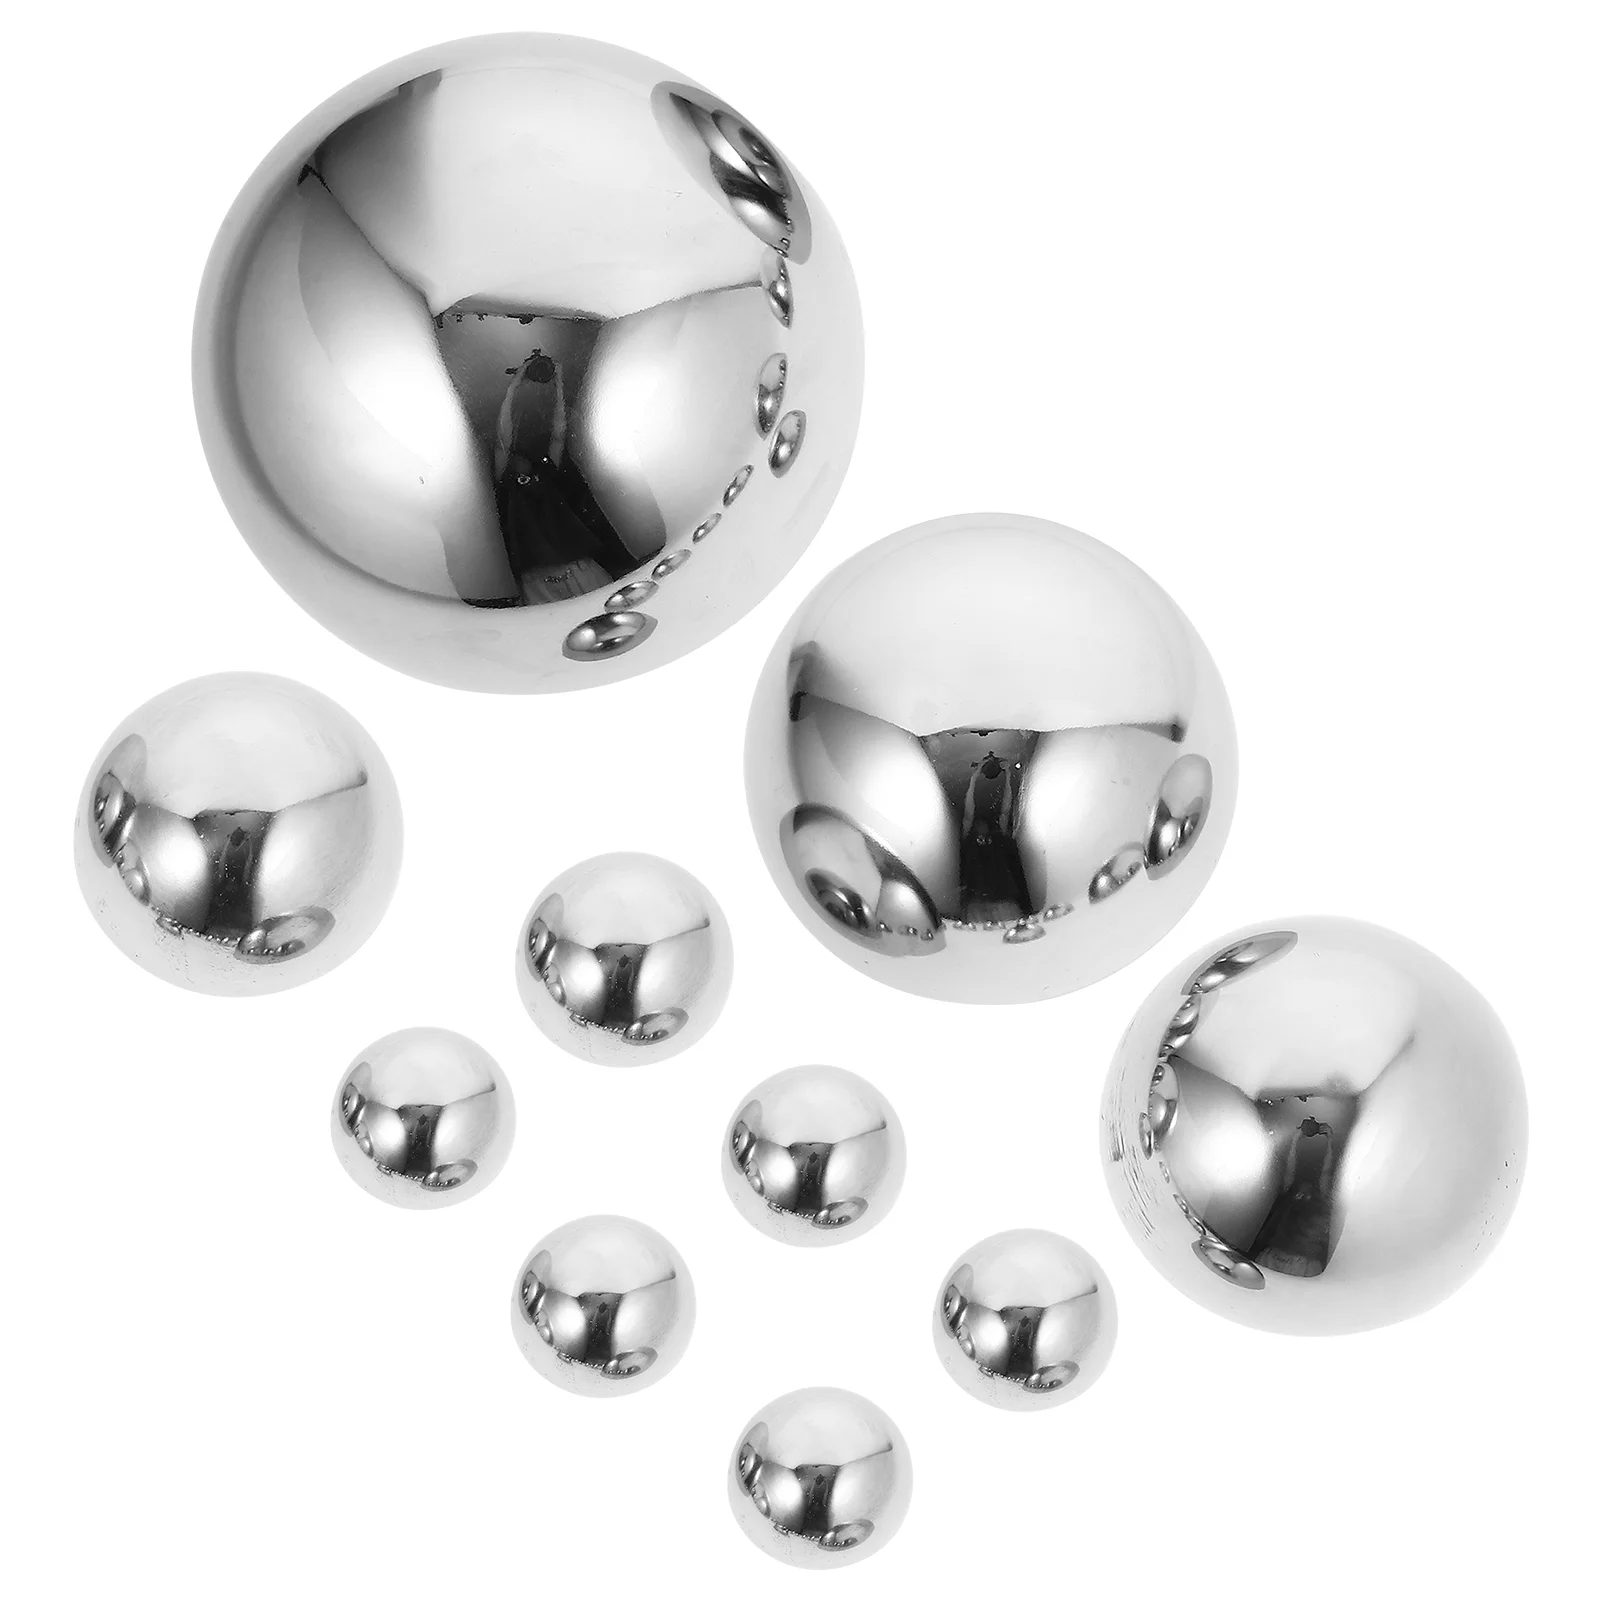 

10 Pcs Outdoor Reflective Spheres Stainless Steel Ball Decor Gazing Trim Globe Decoration Garden Mirror Decorate